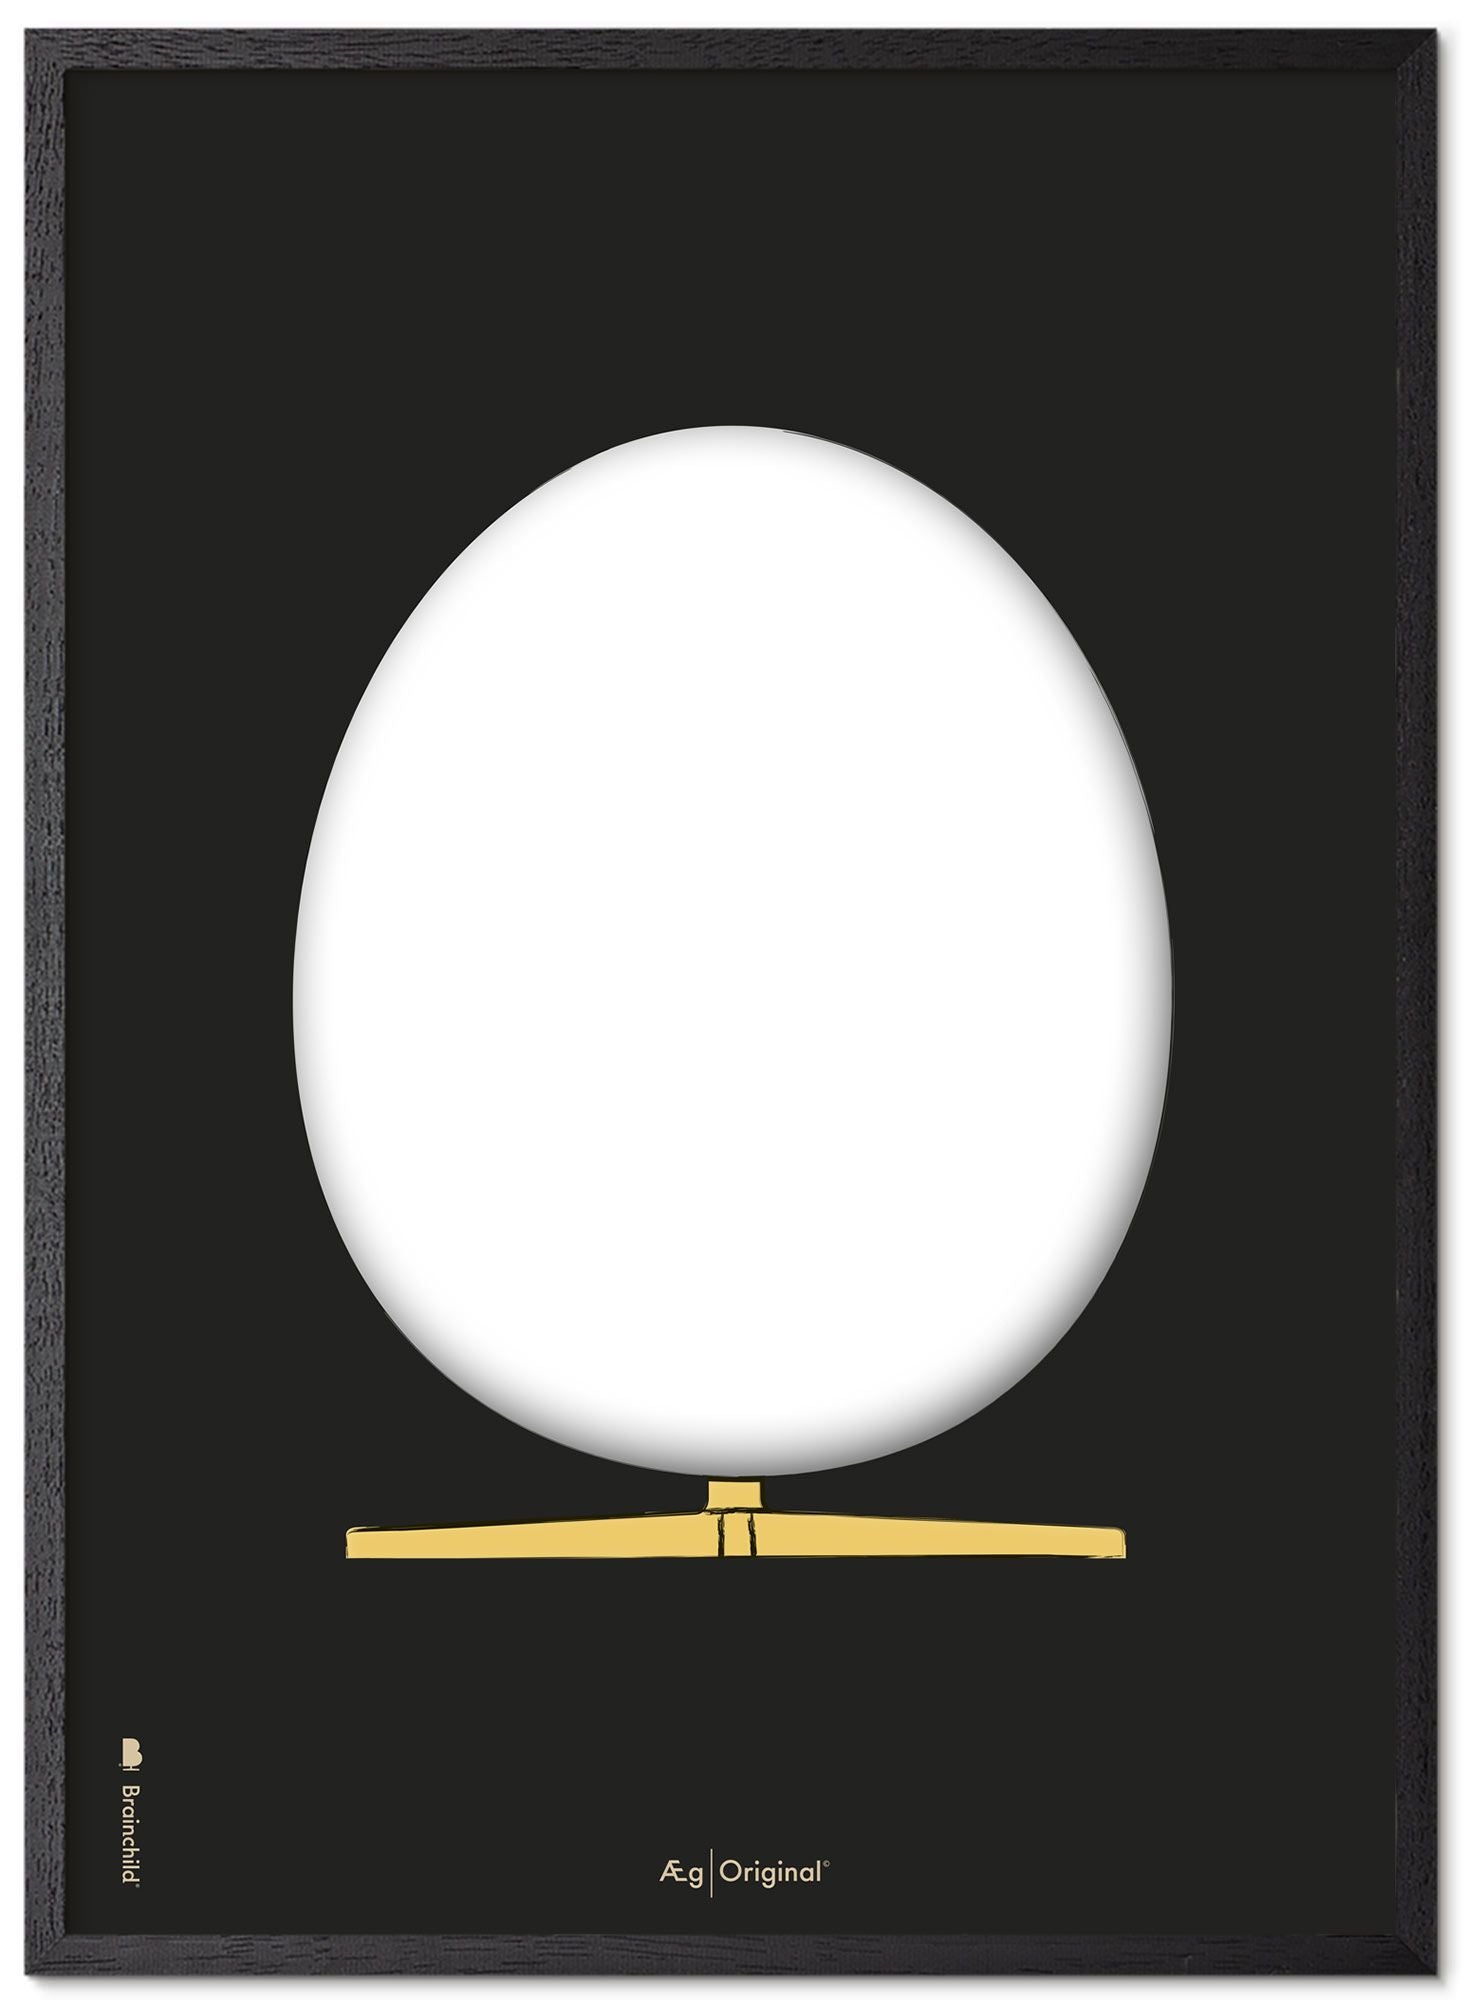 Brainchild The Egg Design Sketch Poster Frame Made Of Black Lacquered Wood 30x40 Cm, Black Background